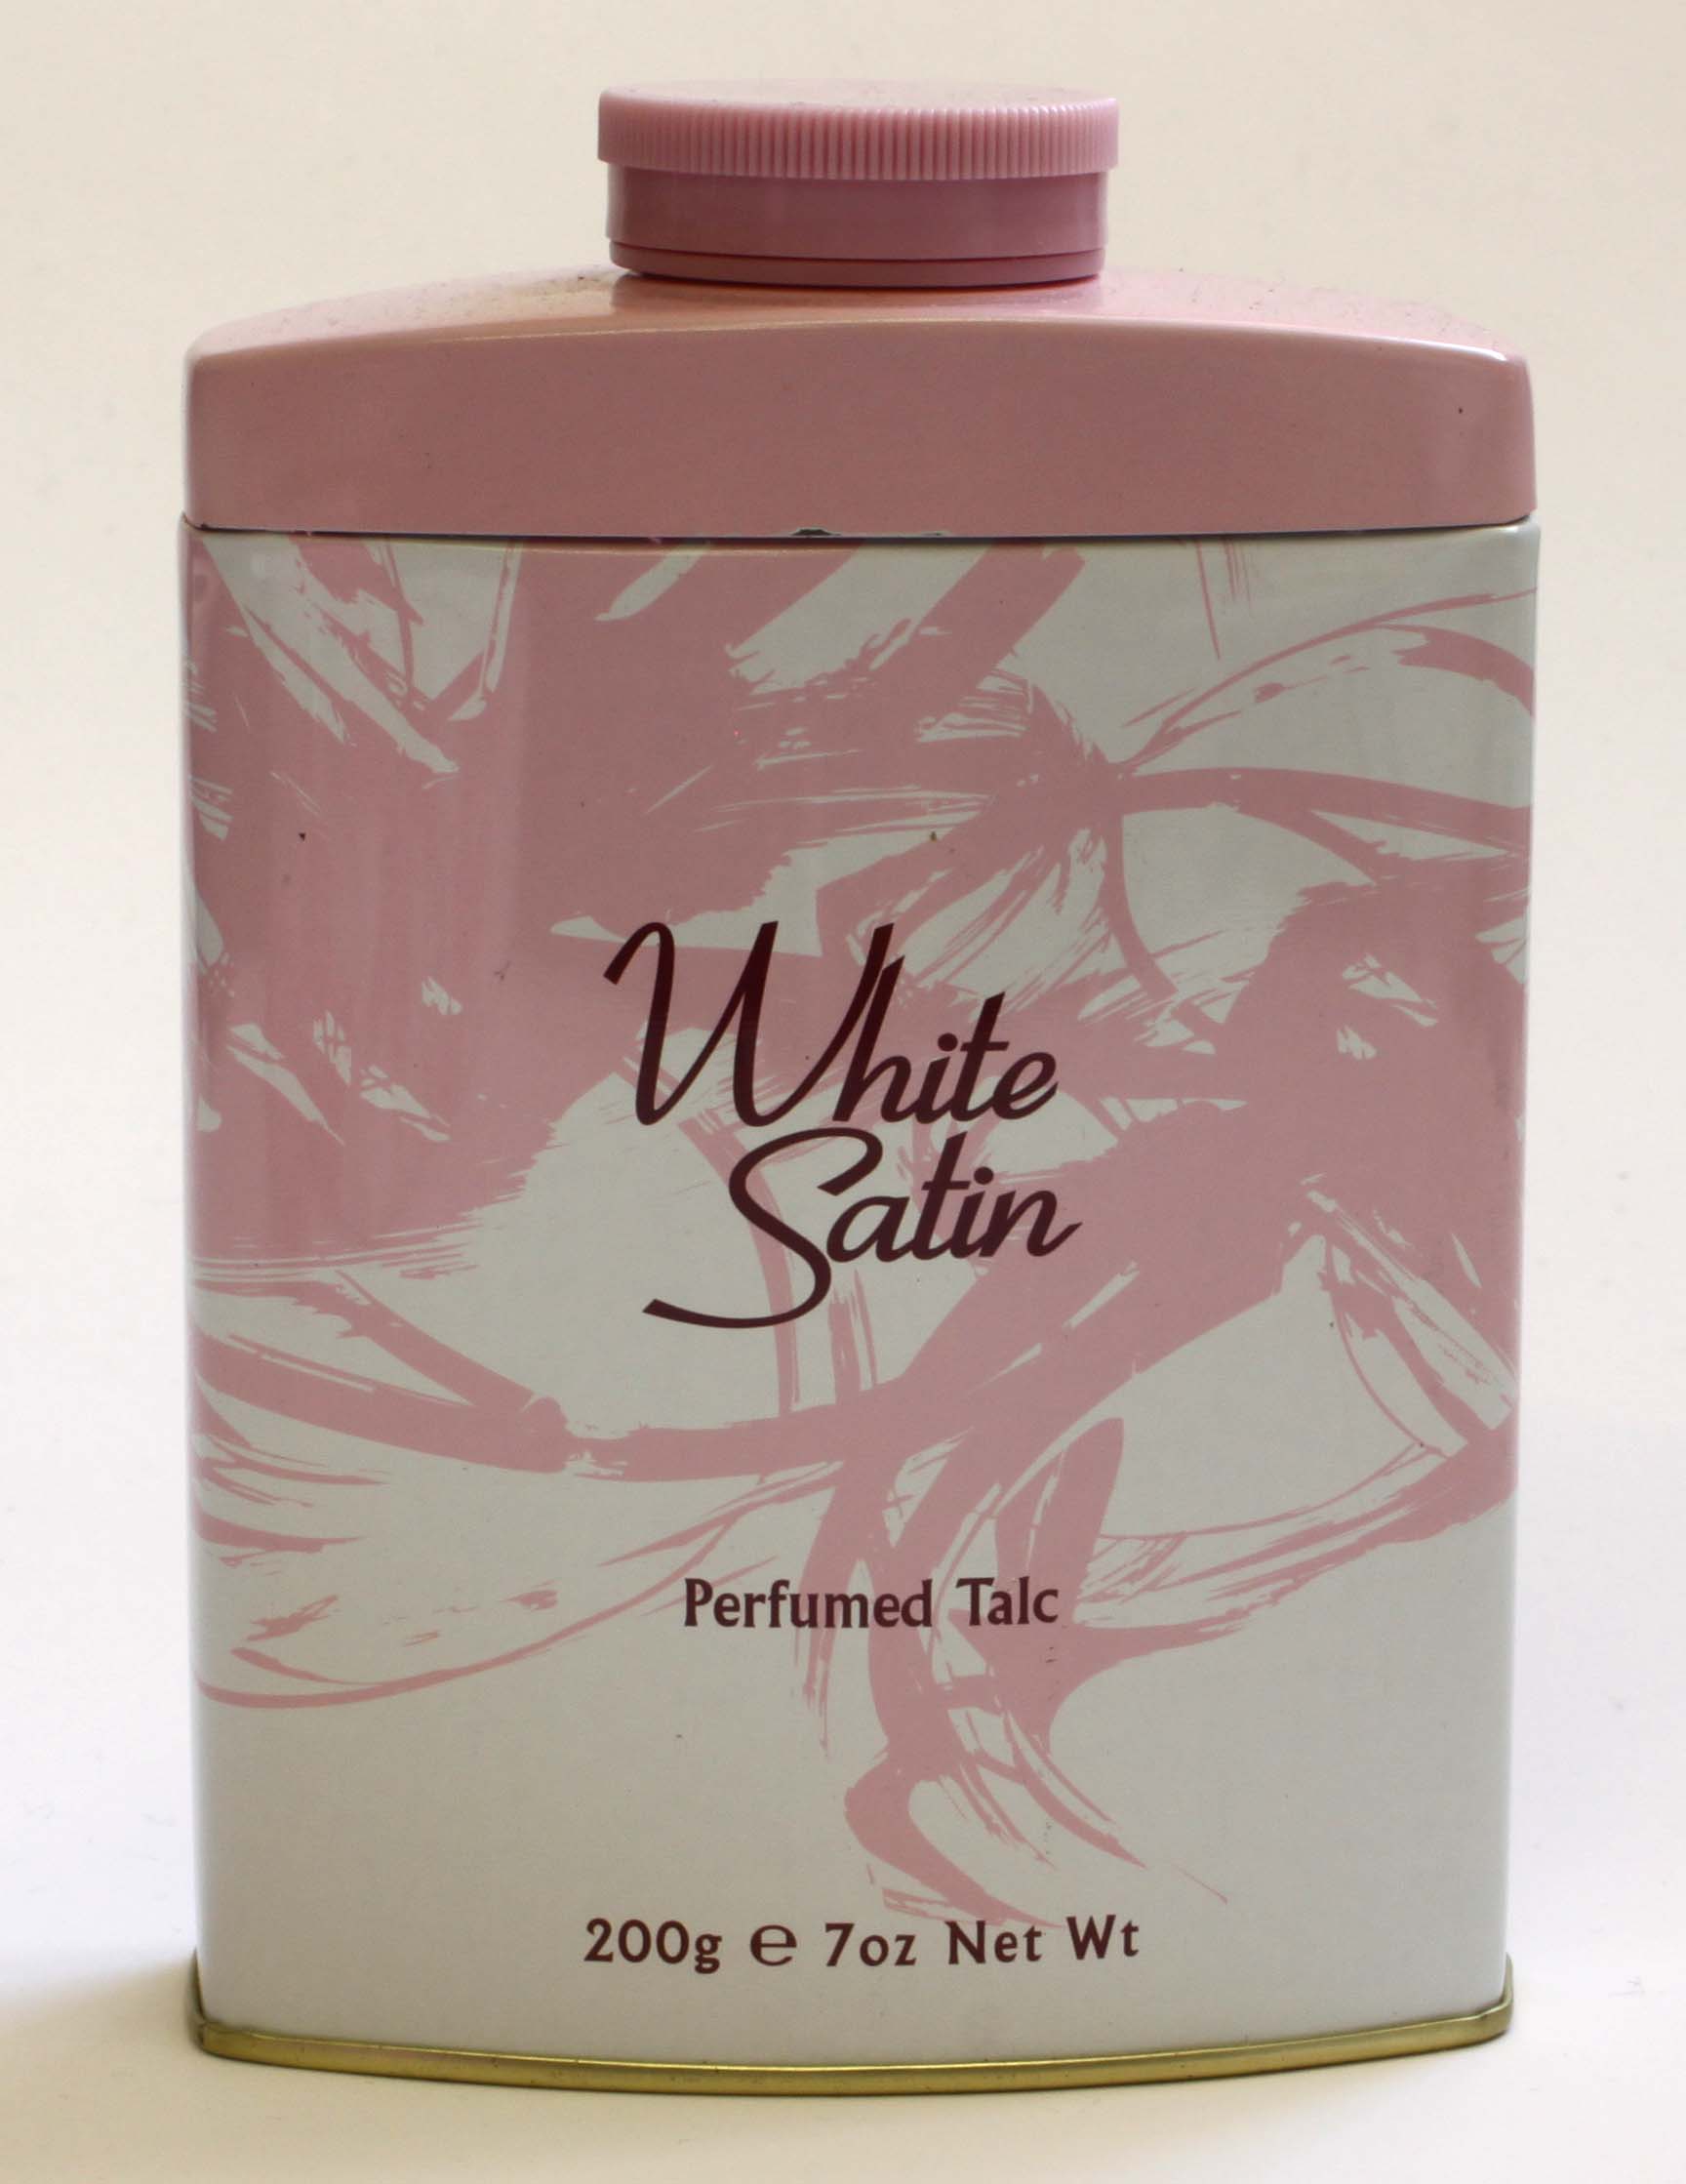 White Satin Perfumed Talc - 200g